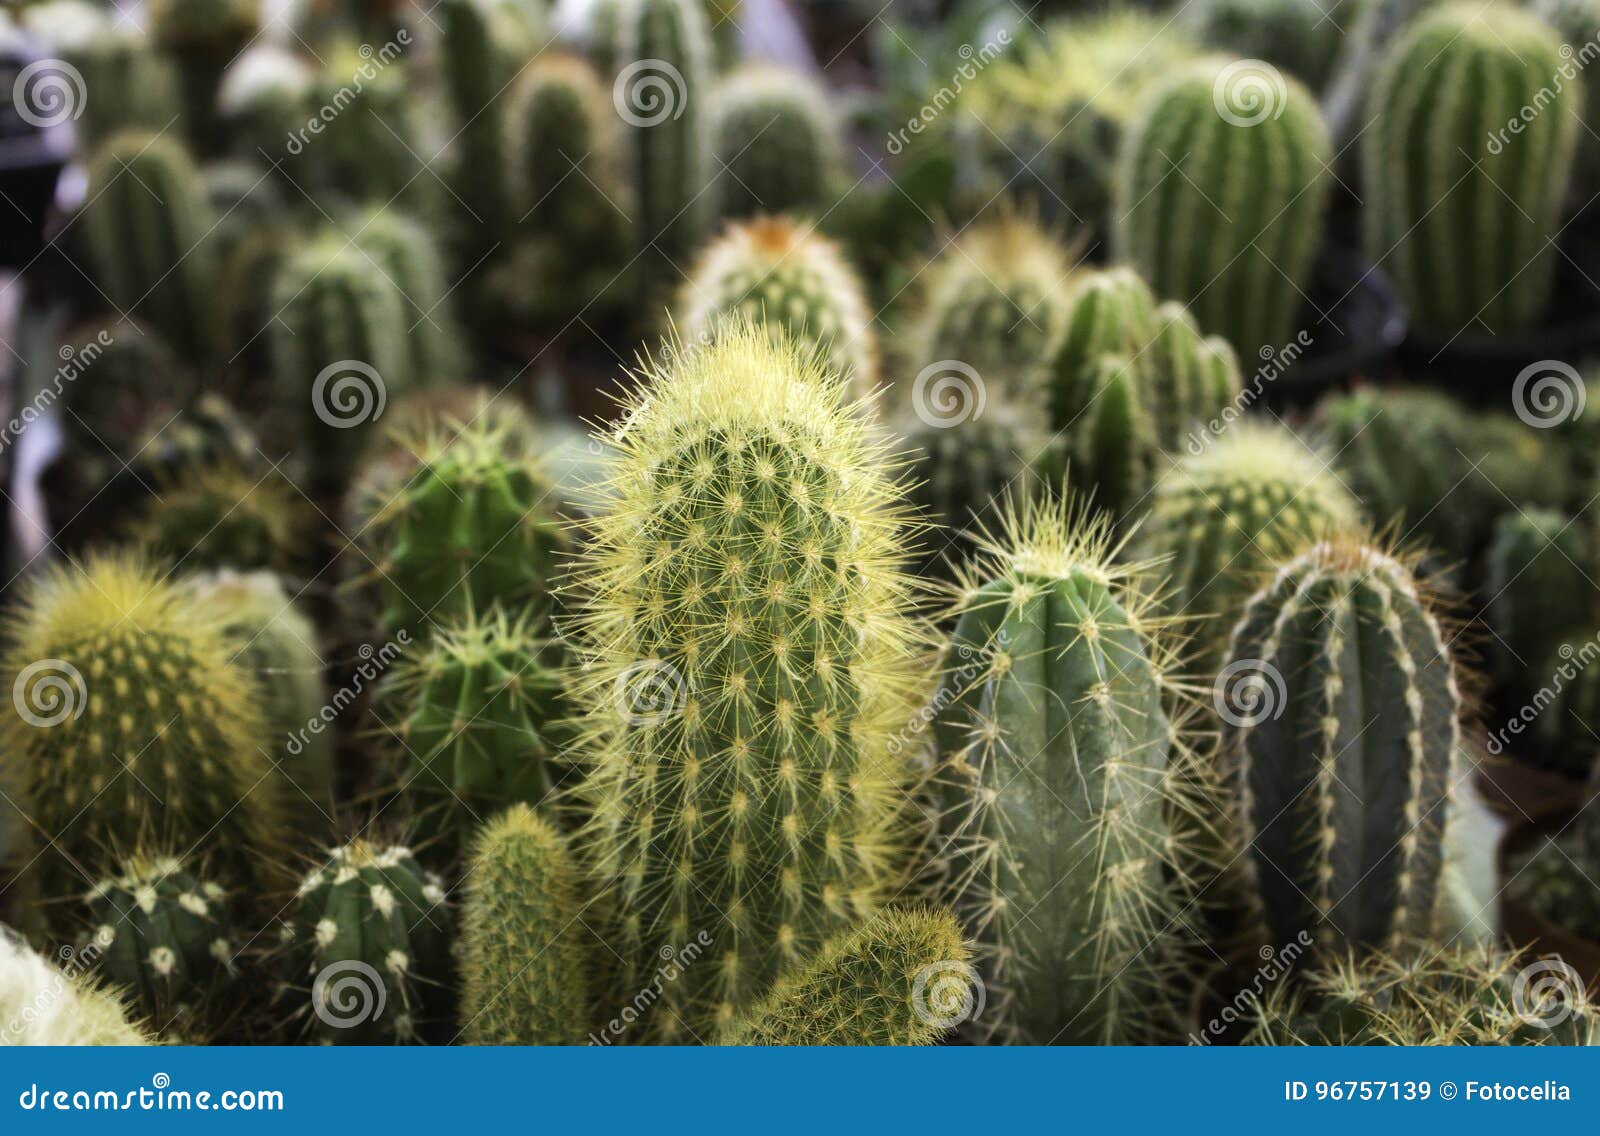 cactus small plants